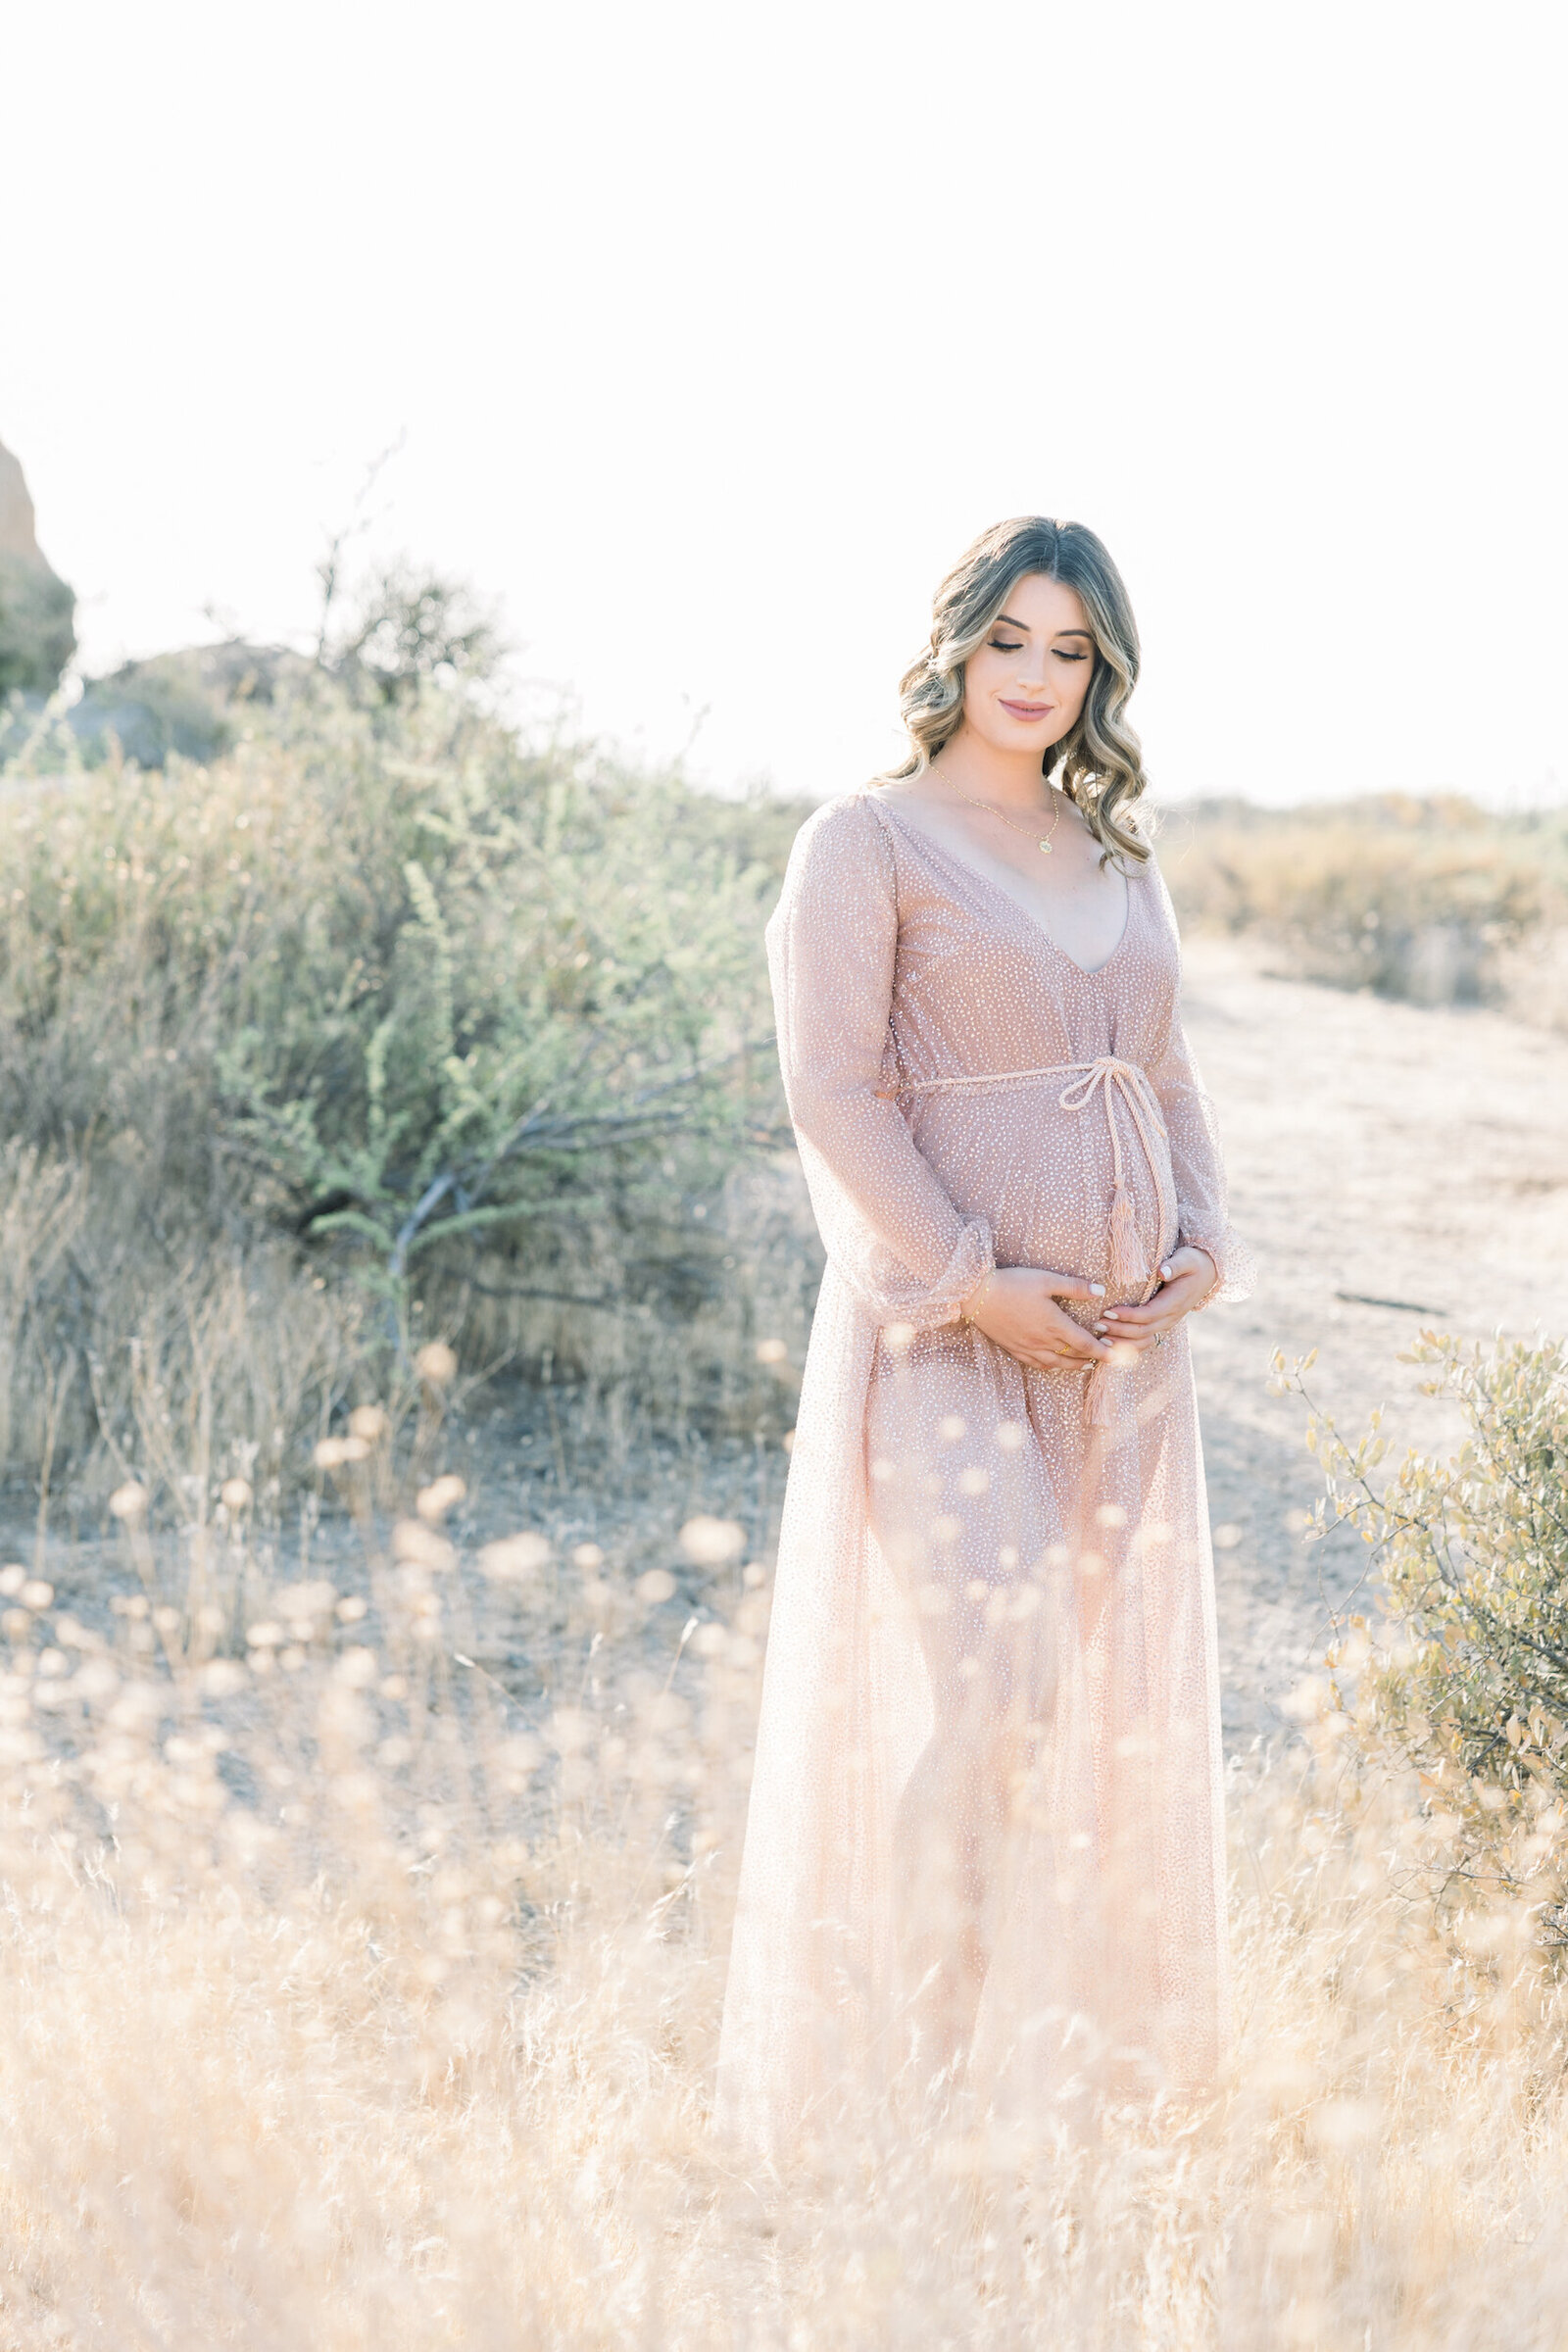 Arizona-Desert-Maternity-Photography-Brenna-Heater37